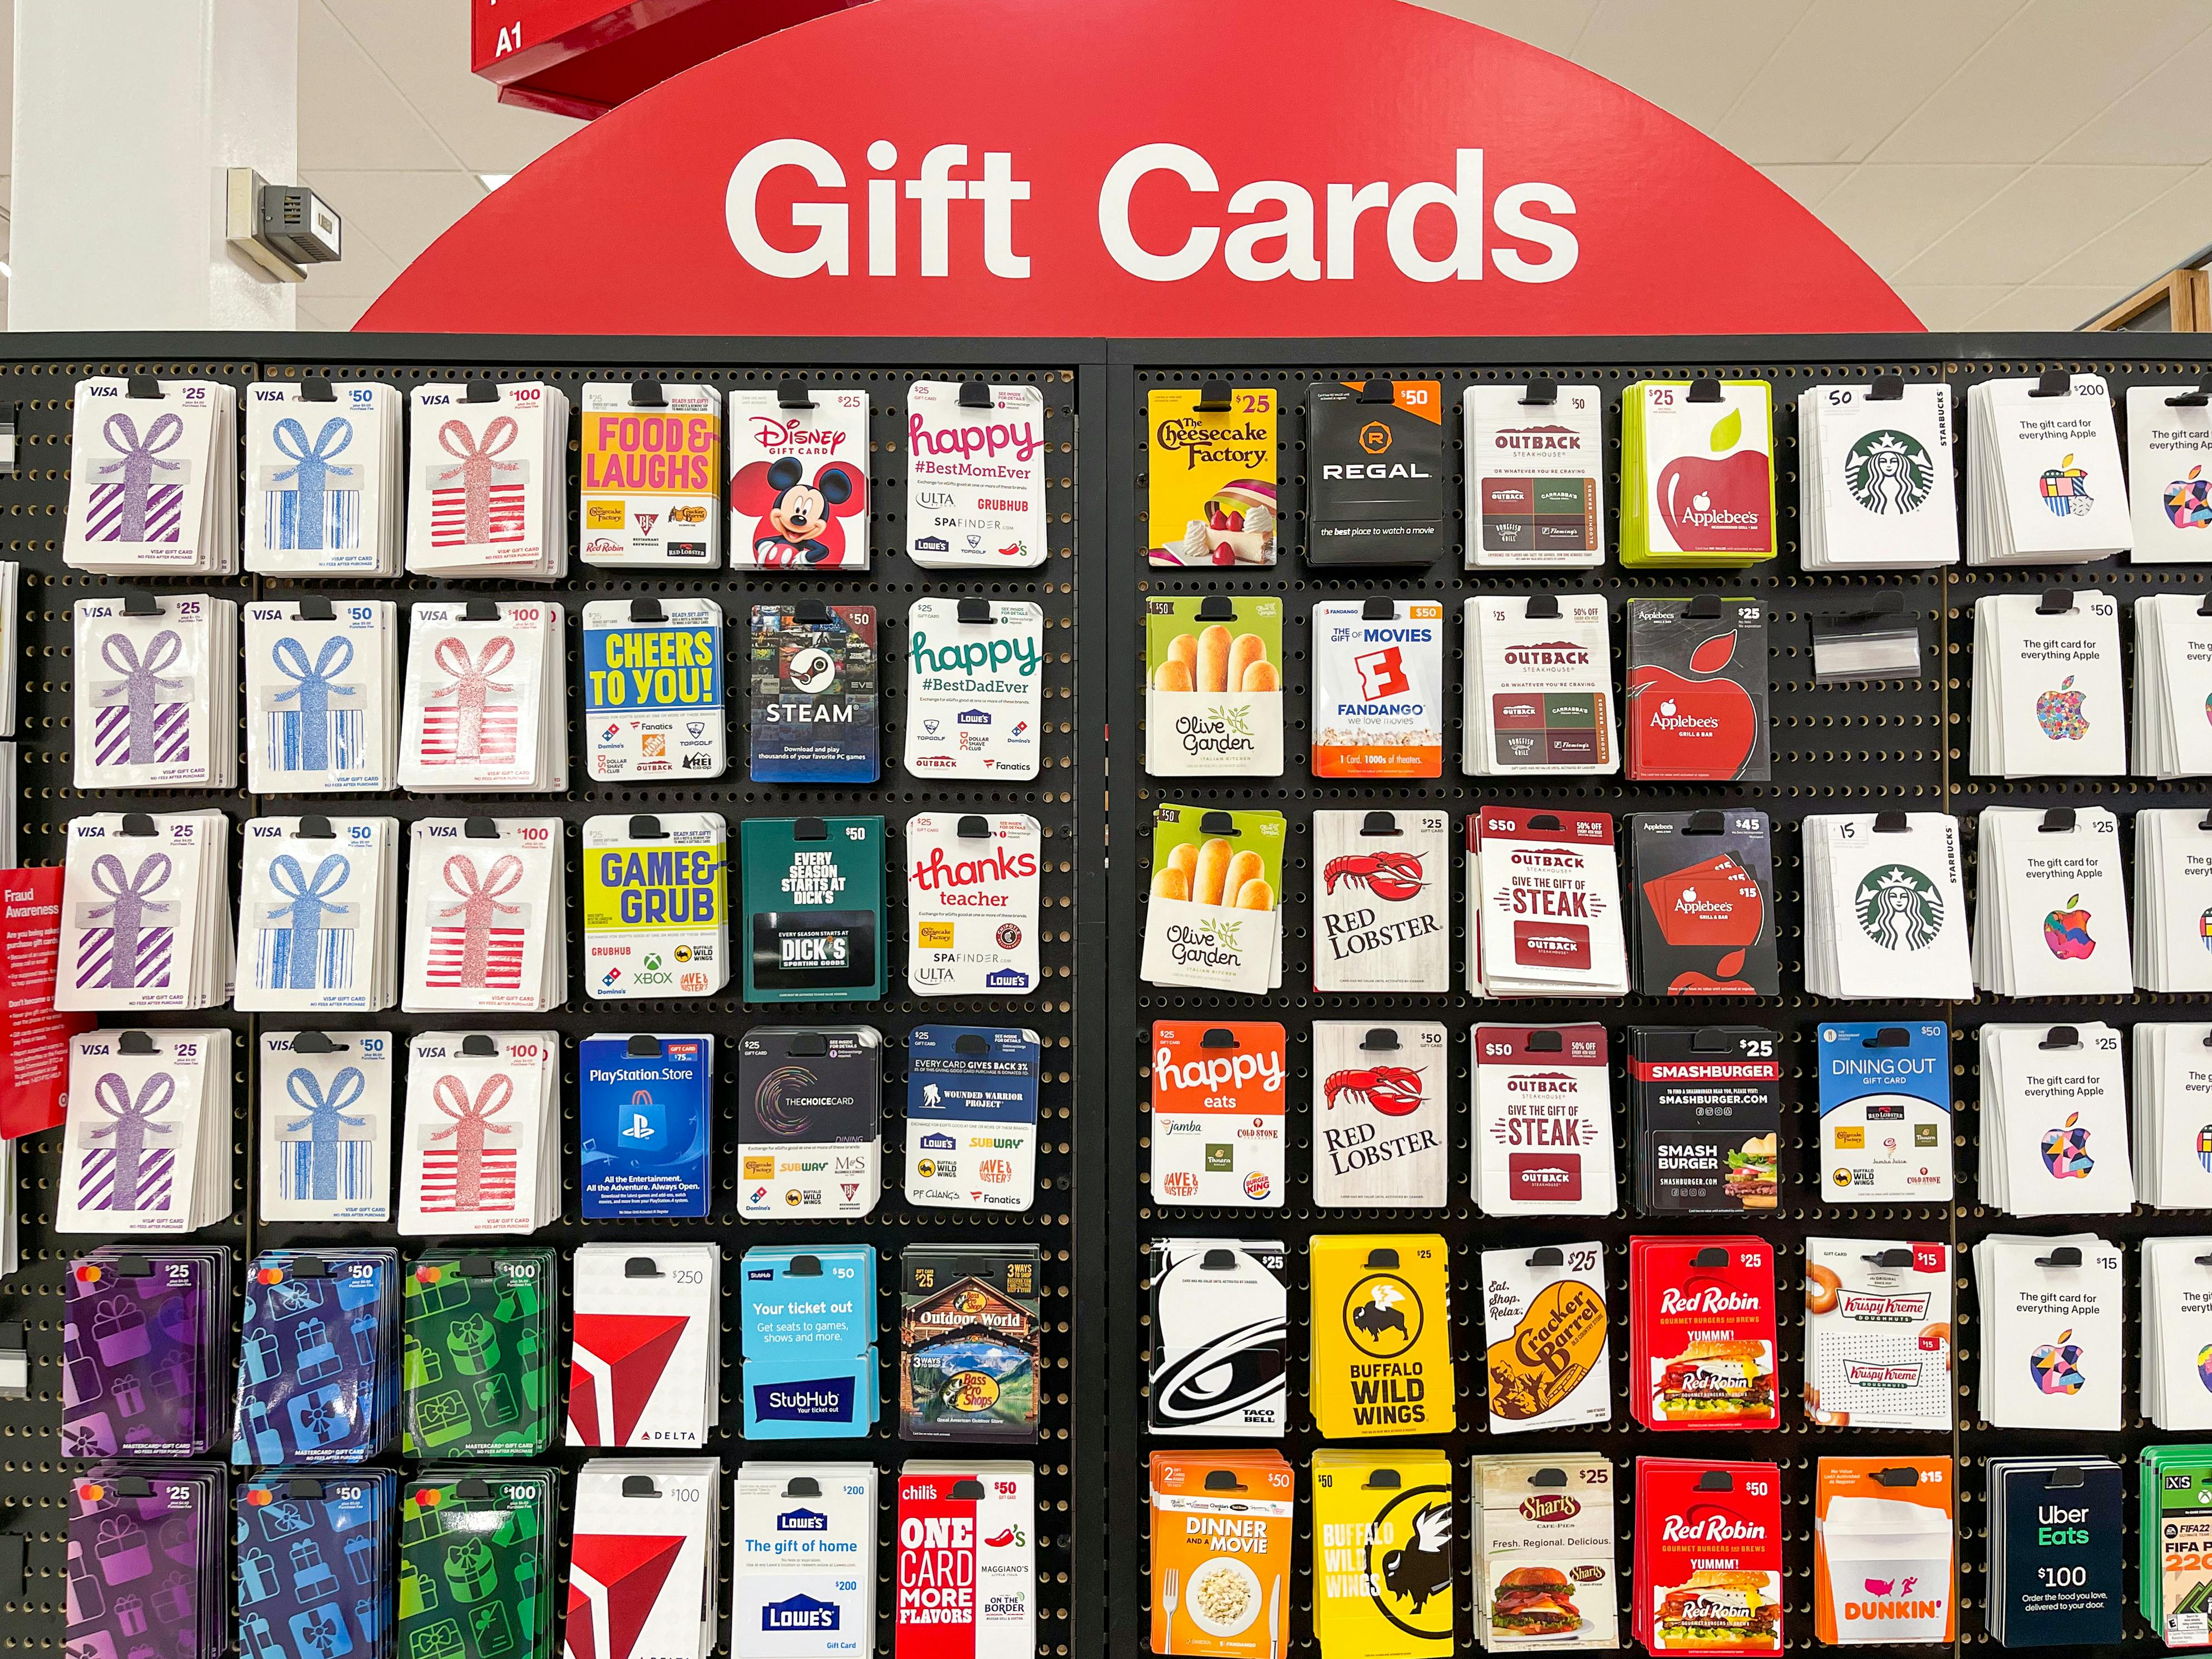 Can I Use Amazon Gift Card at Walmart?